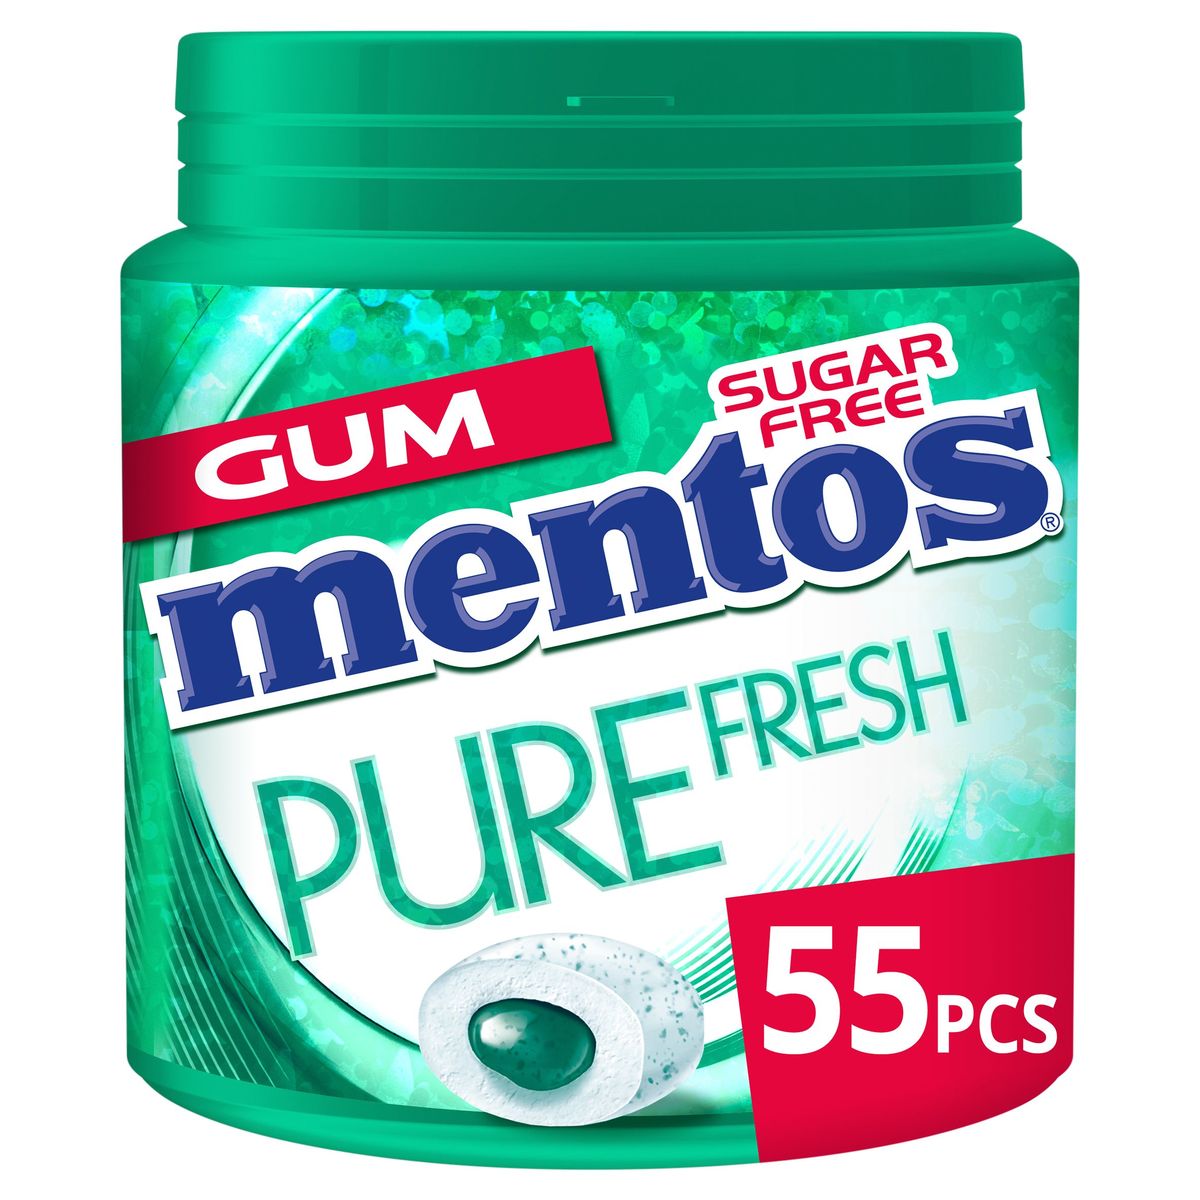 Mentos Gum Pure Fresh Wintergreen 55 Stuks